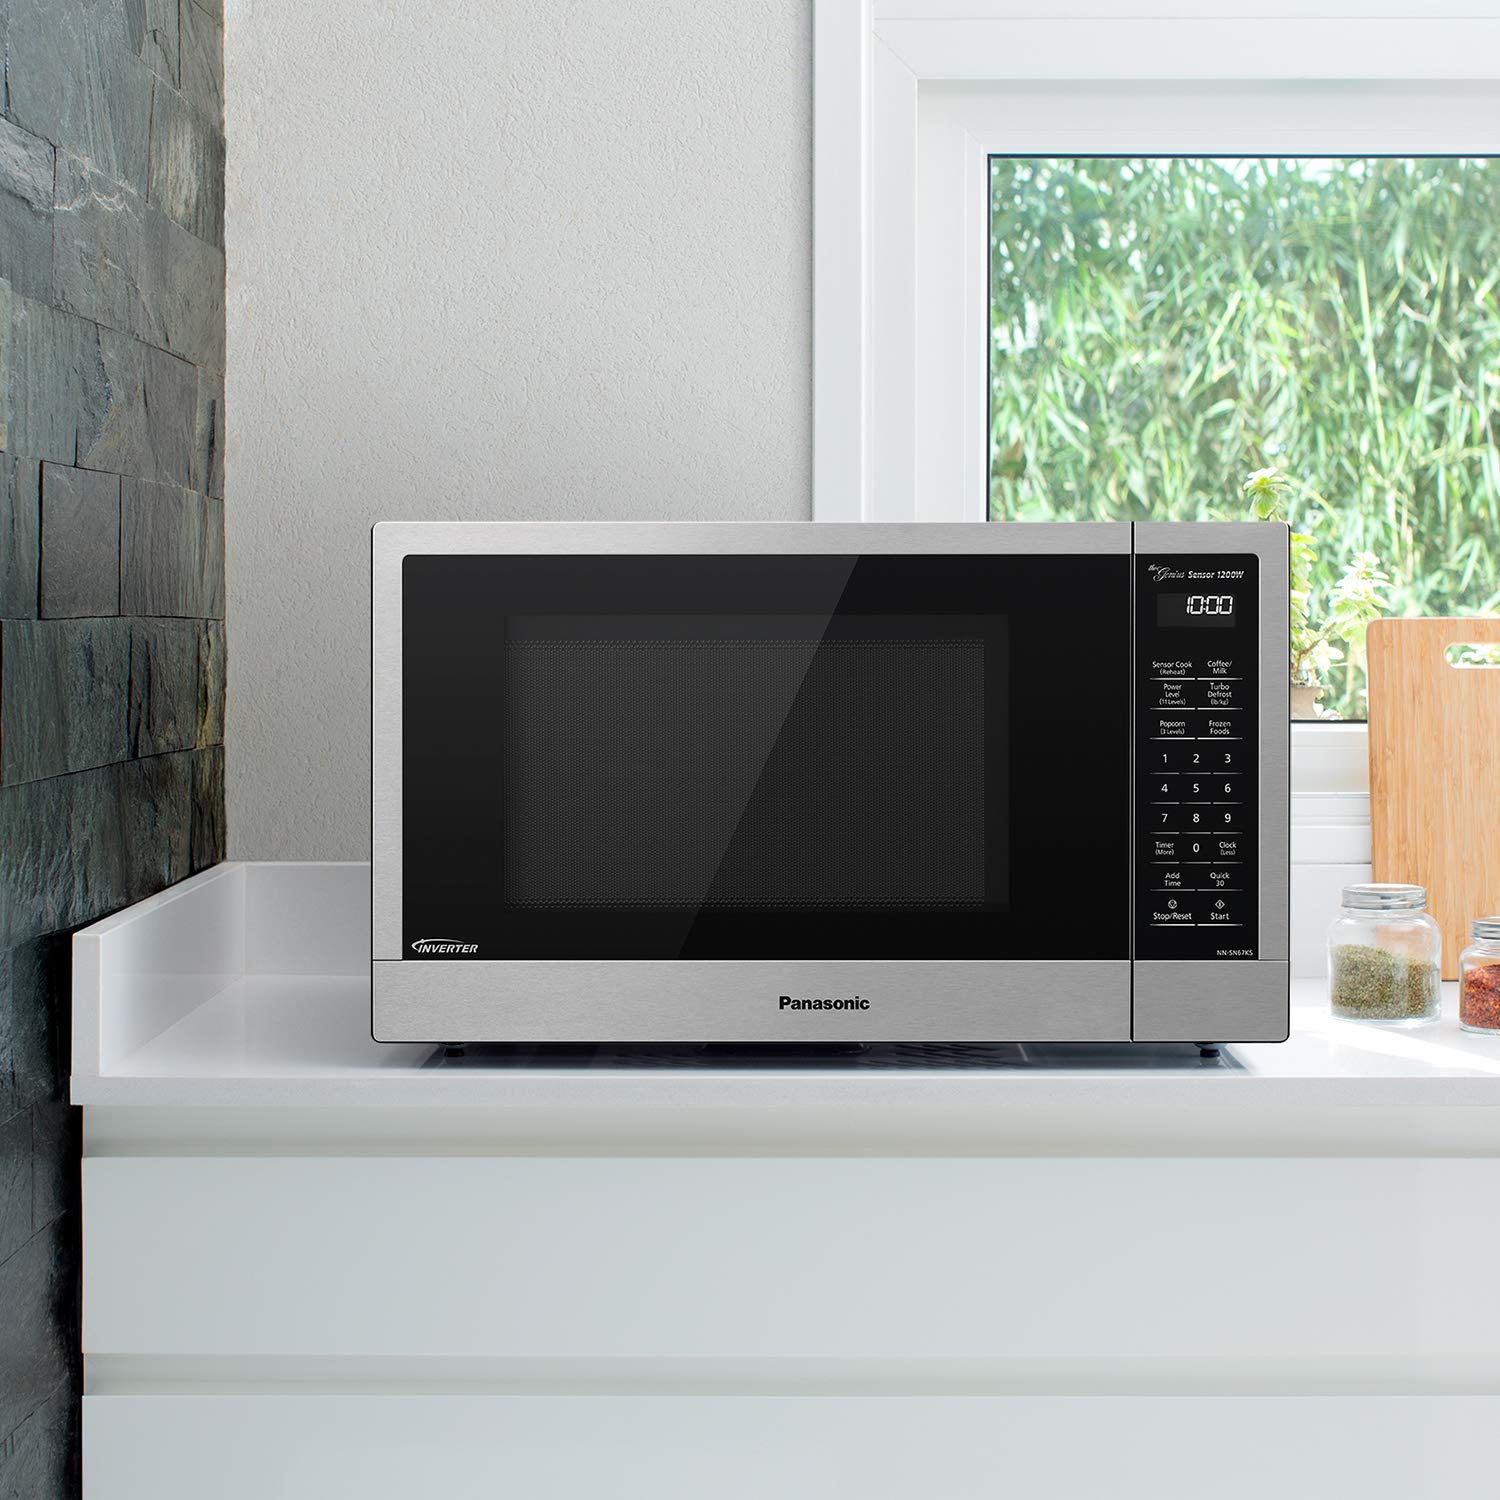 Panasonic NN-SN67K Microwave Oven, 1.2 cu.ft, Stainless Steel/Silver